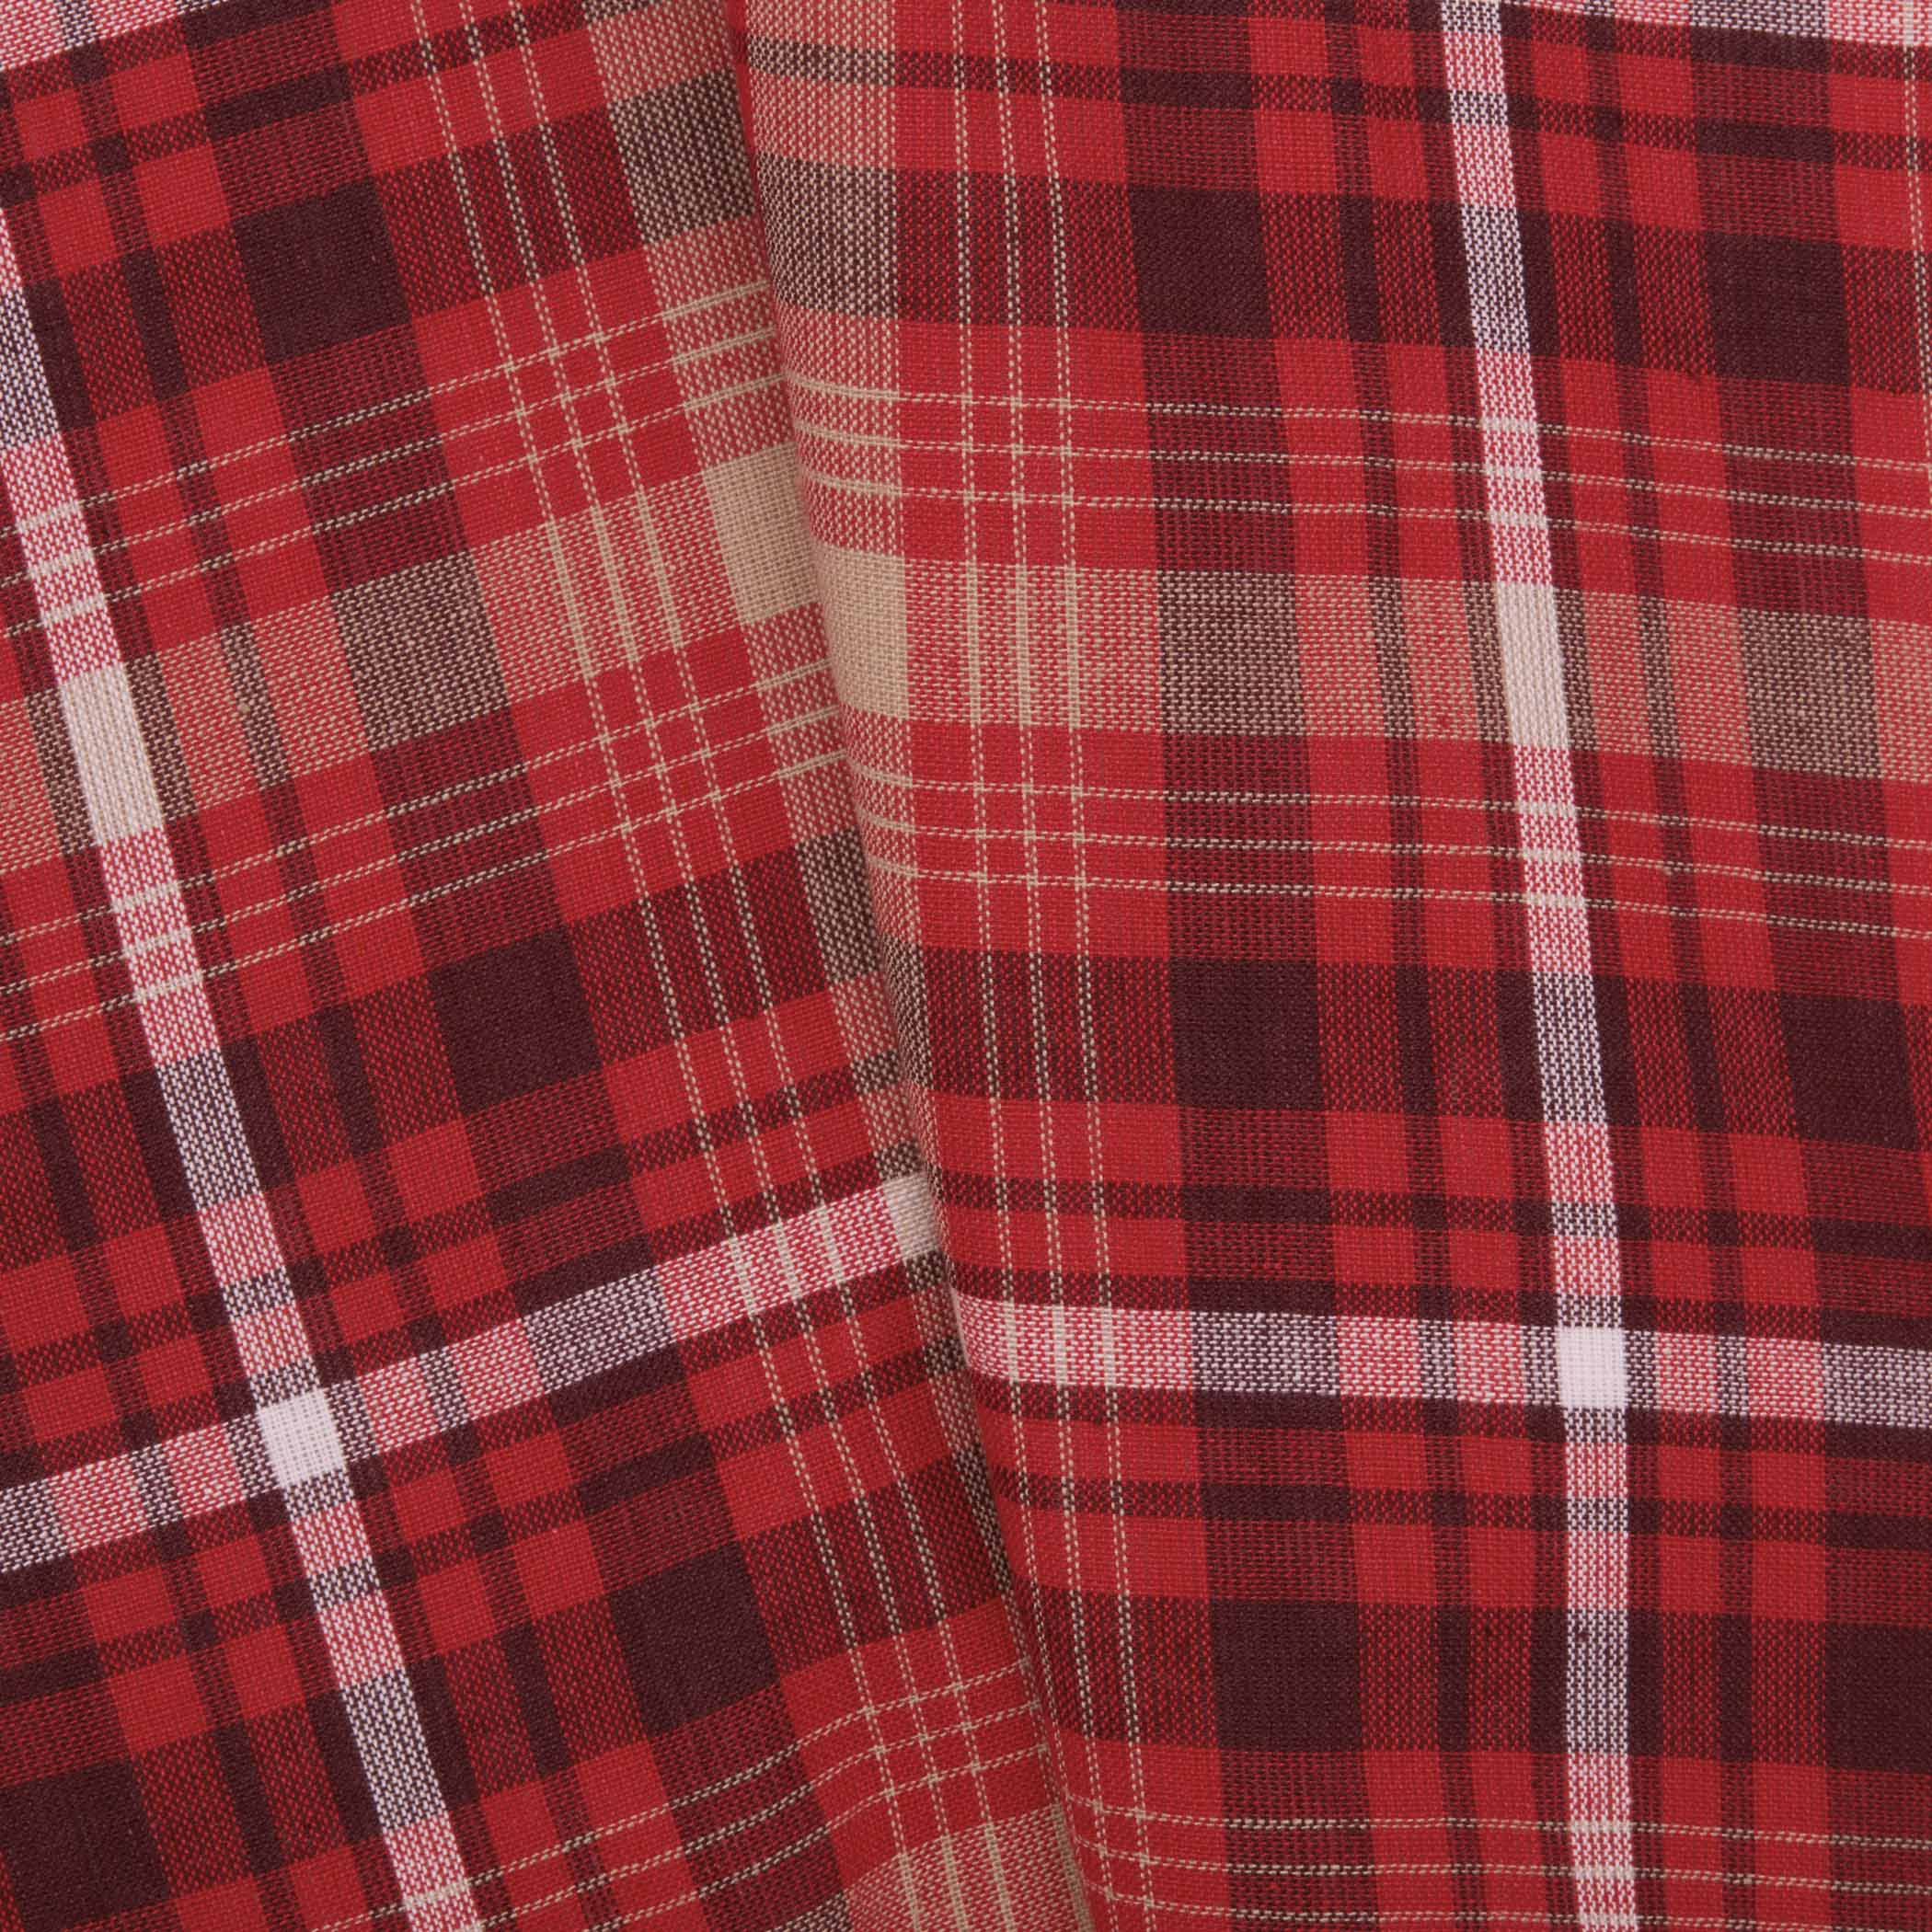 Braxton Scalloped Swag Curtain Set of 2 36x36x16